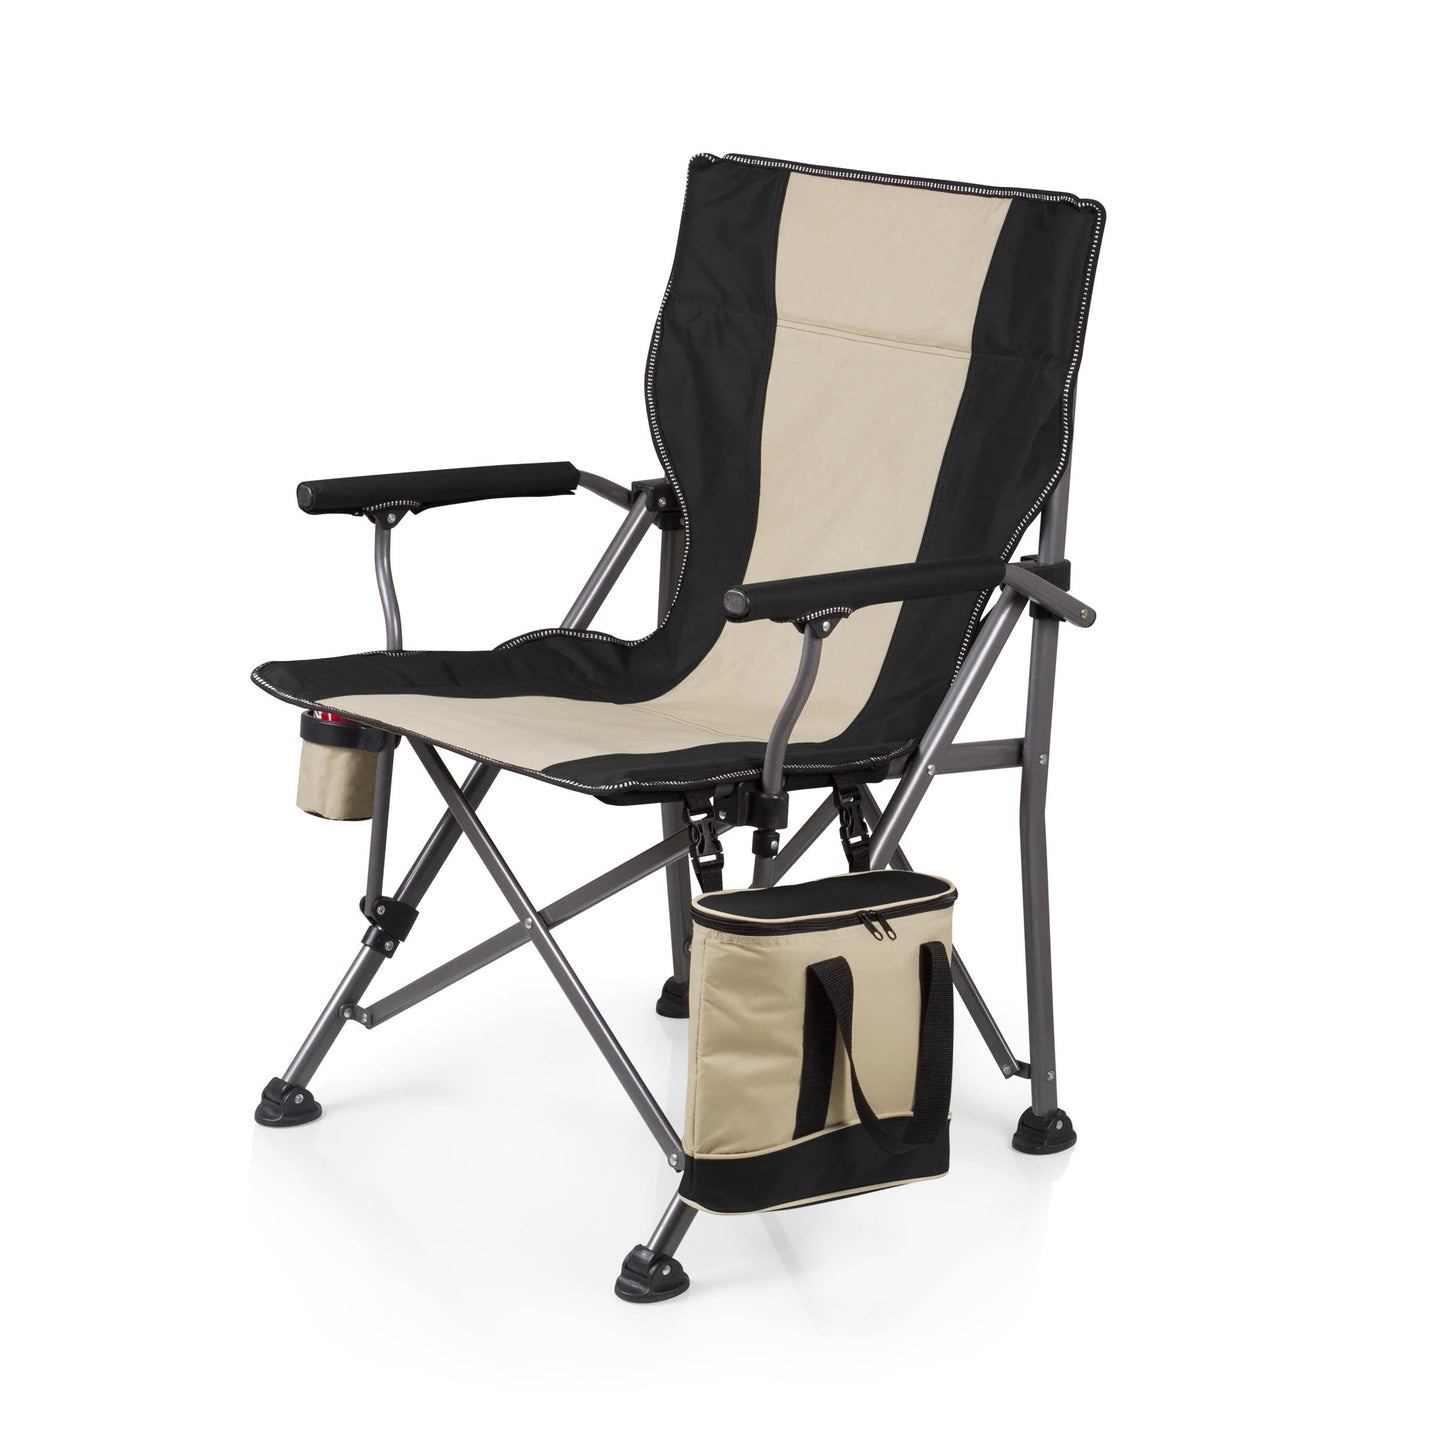 Jacksonville Jaguars - Outlander Folding Camping Chair with Cooler